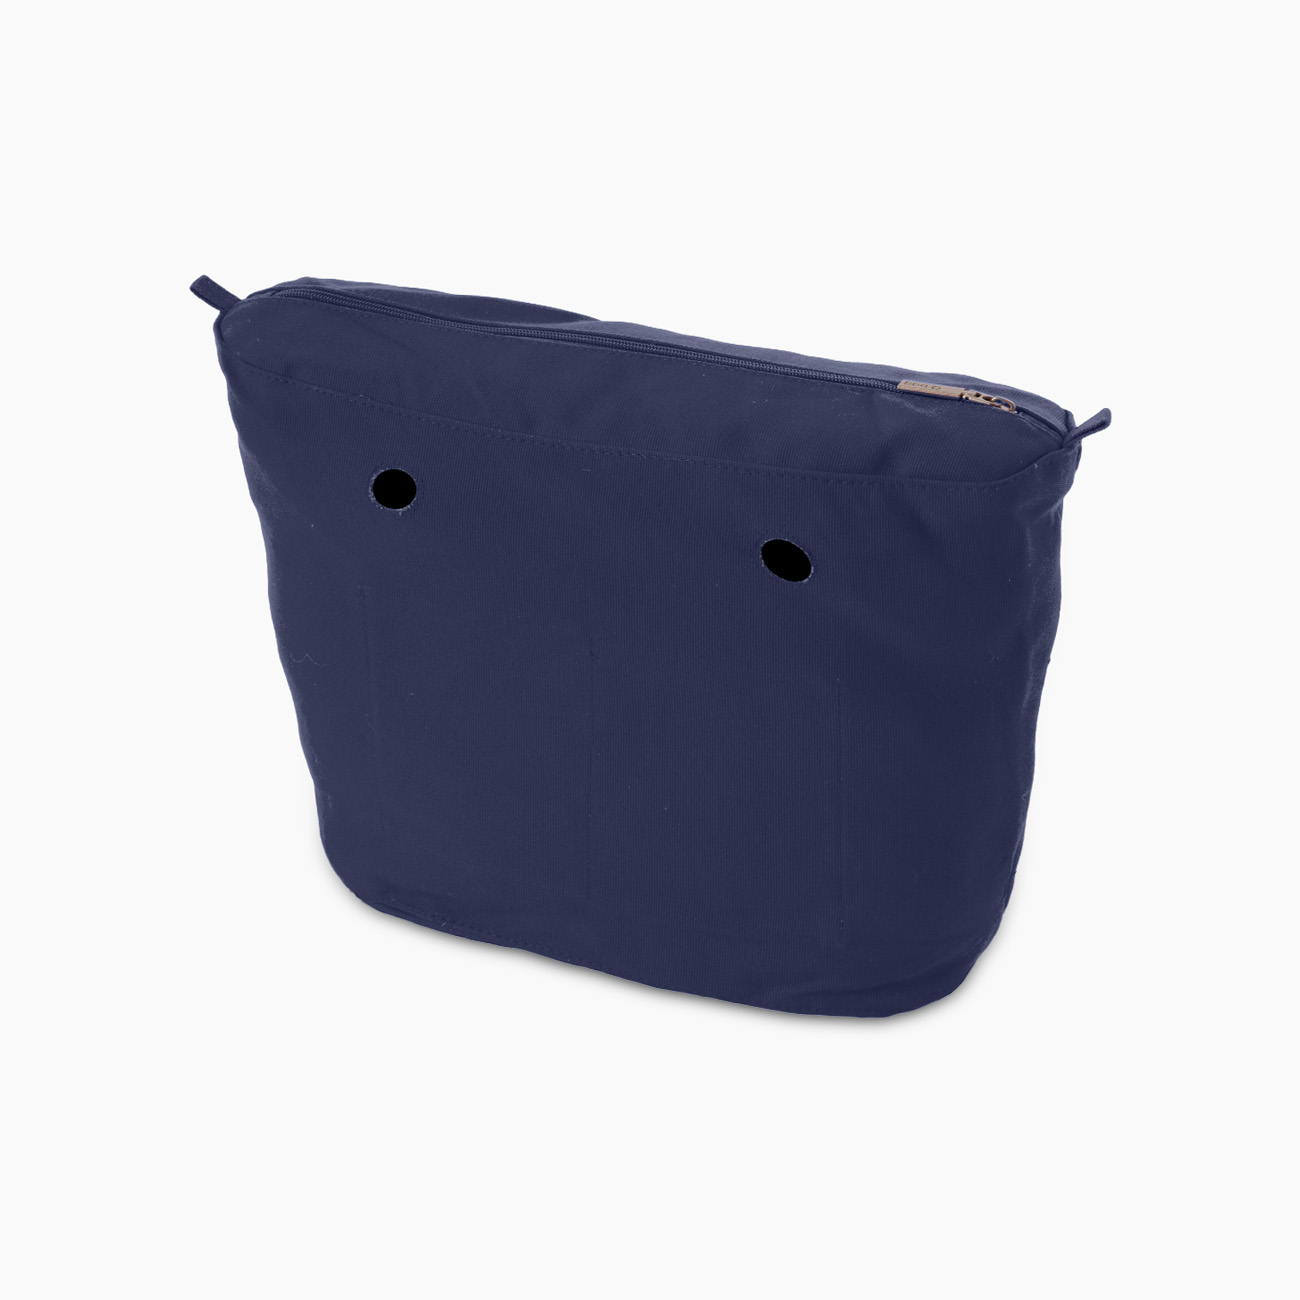 O bag mini kavas kumaş mavi iç çanta